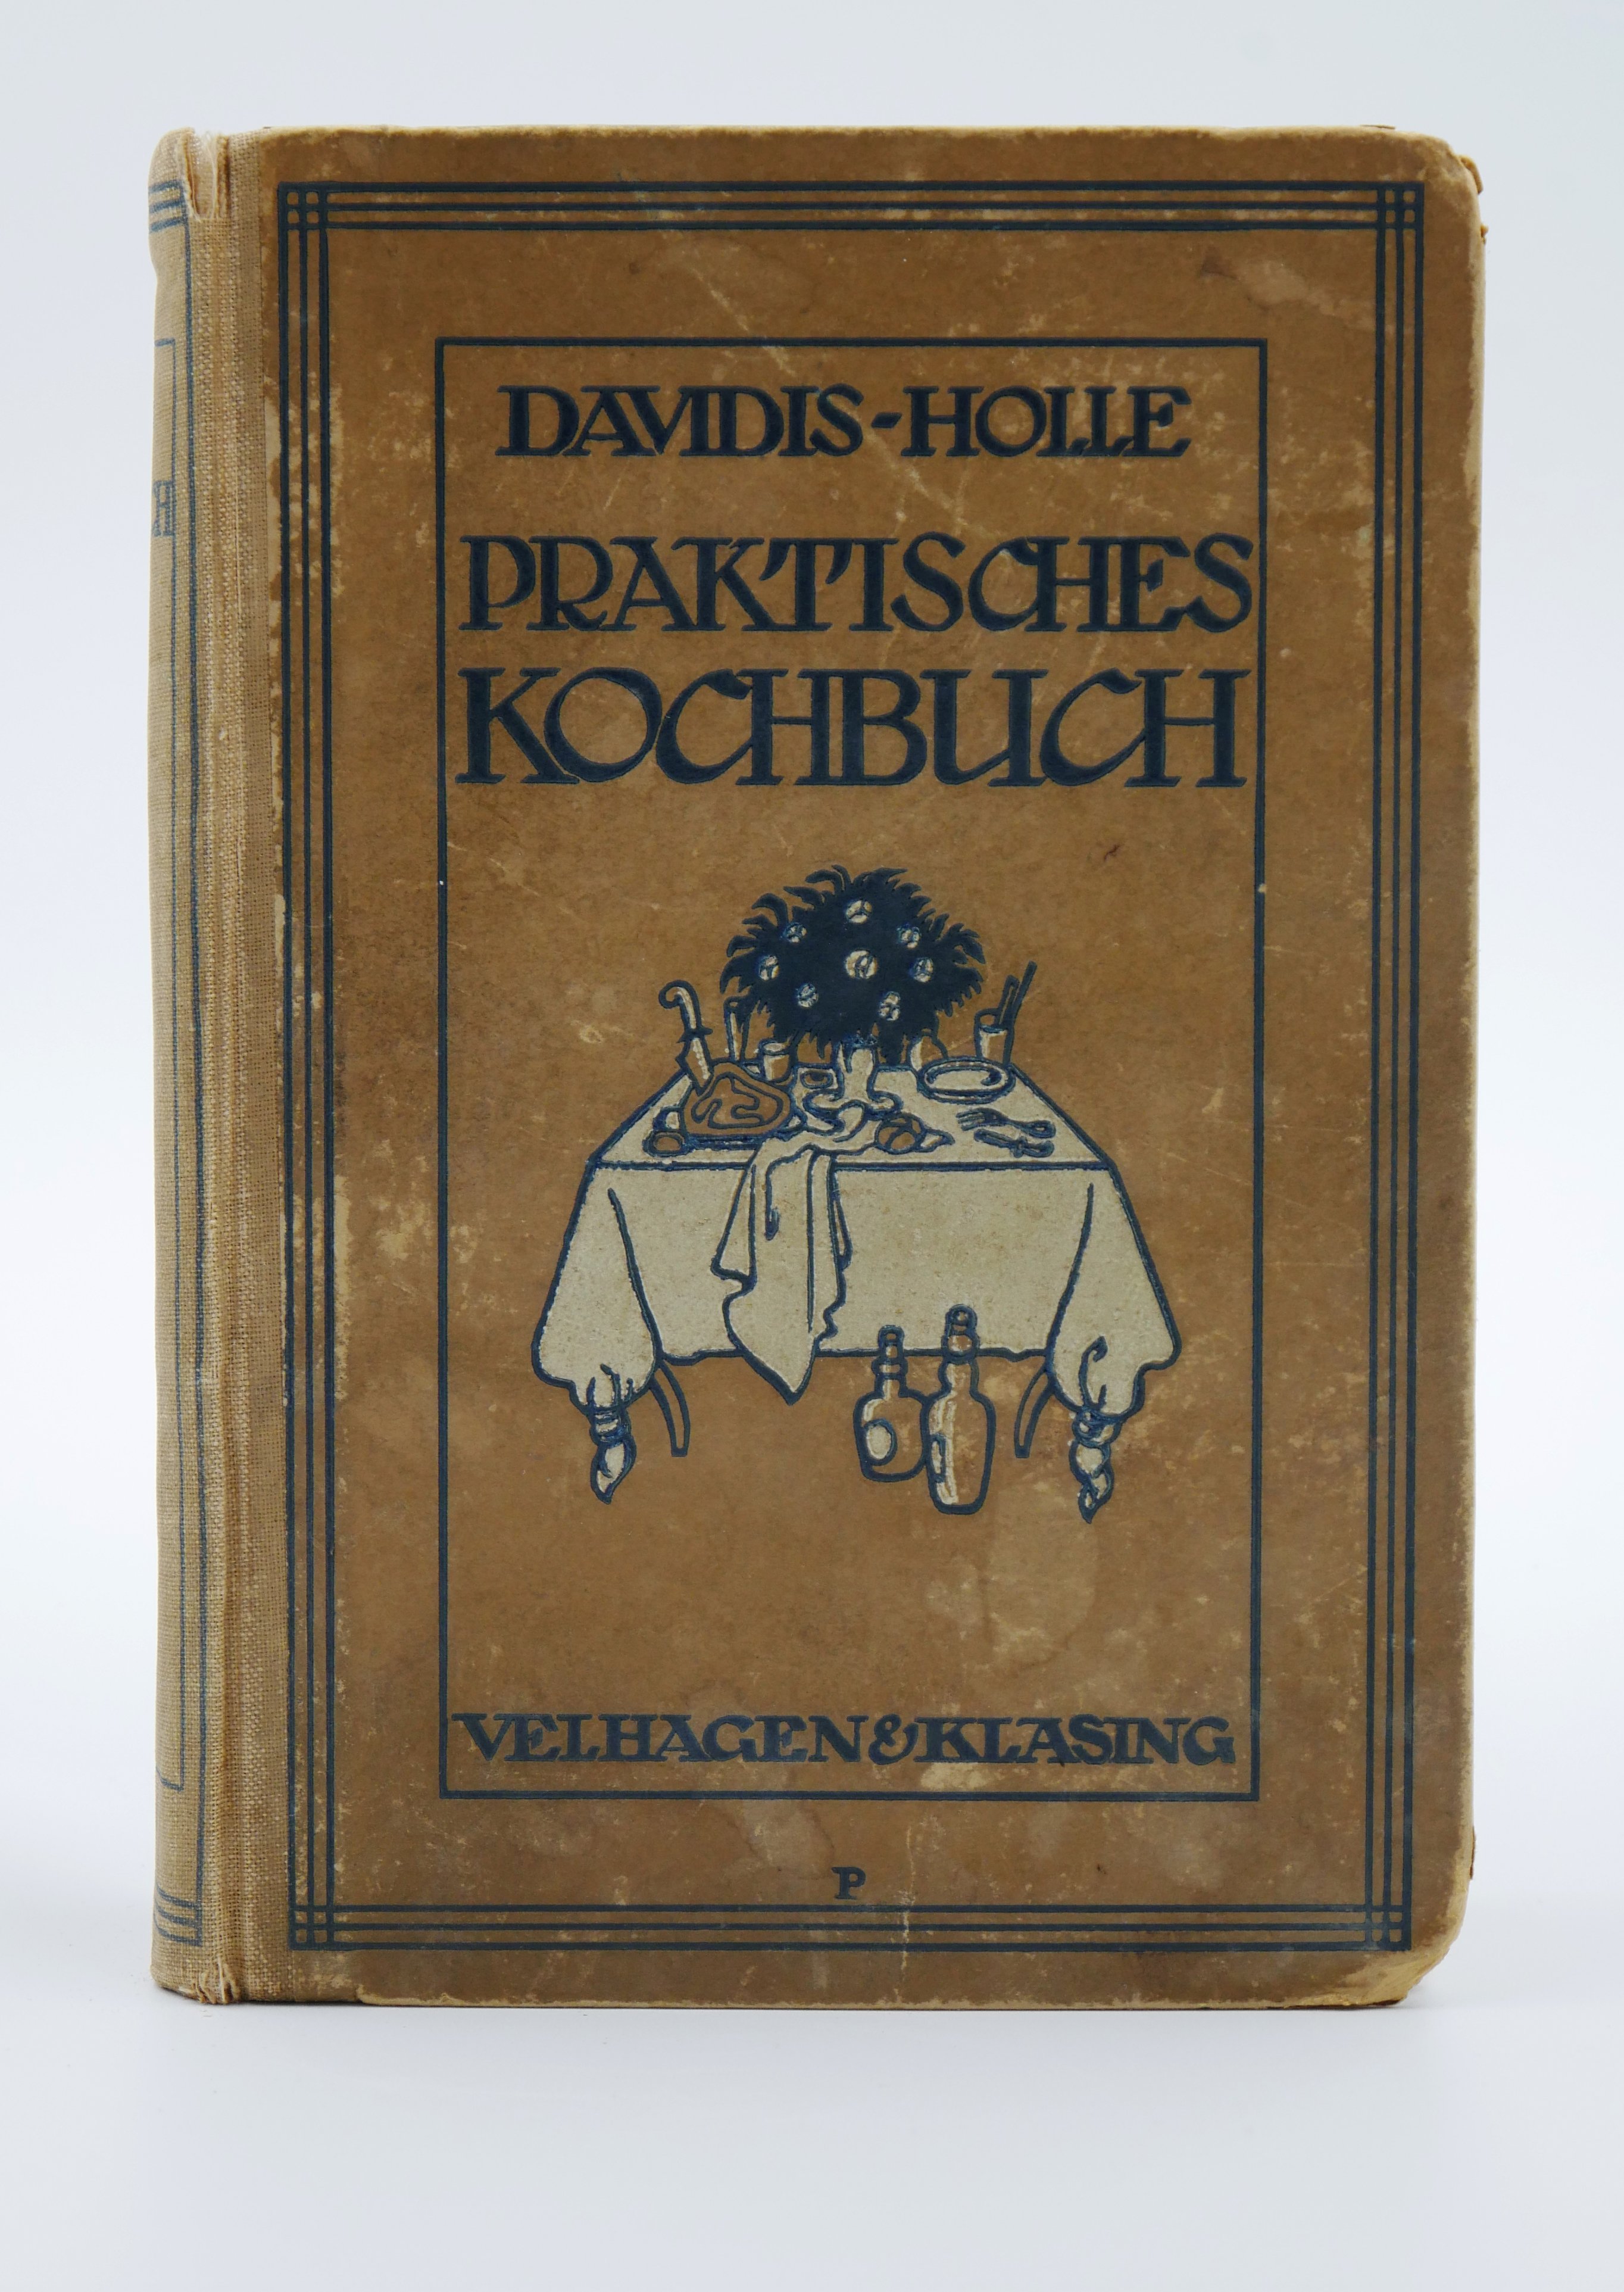 Kochbuch: Henriette Davidis, Luise Holle: "Praktisches Kochbuch" (1917) (Deutsches Kochbuchmuseum CC BY-NC-SA)